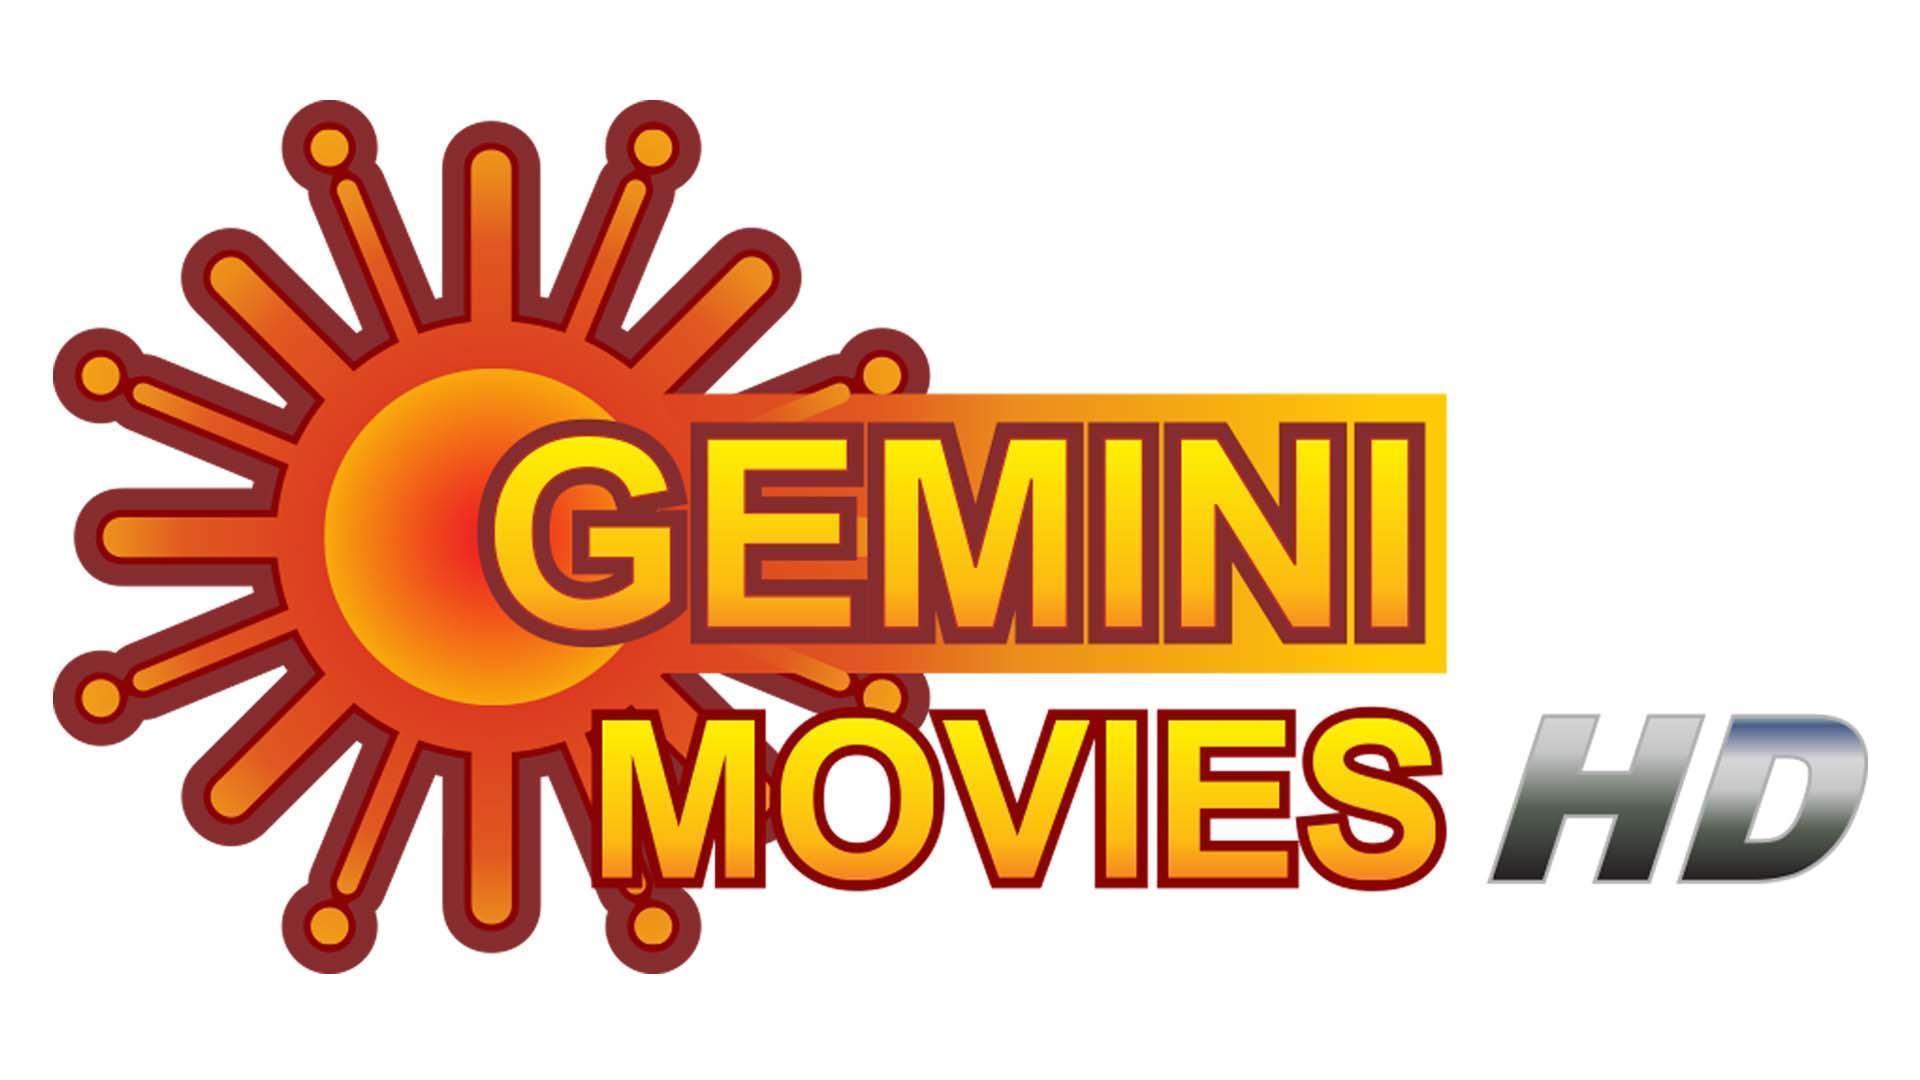 watch gemini tv serials online